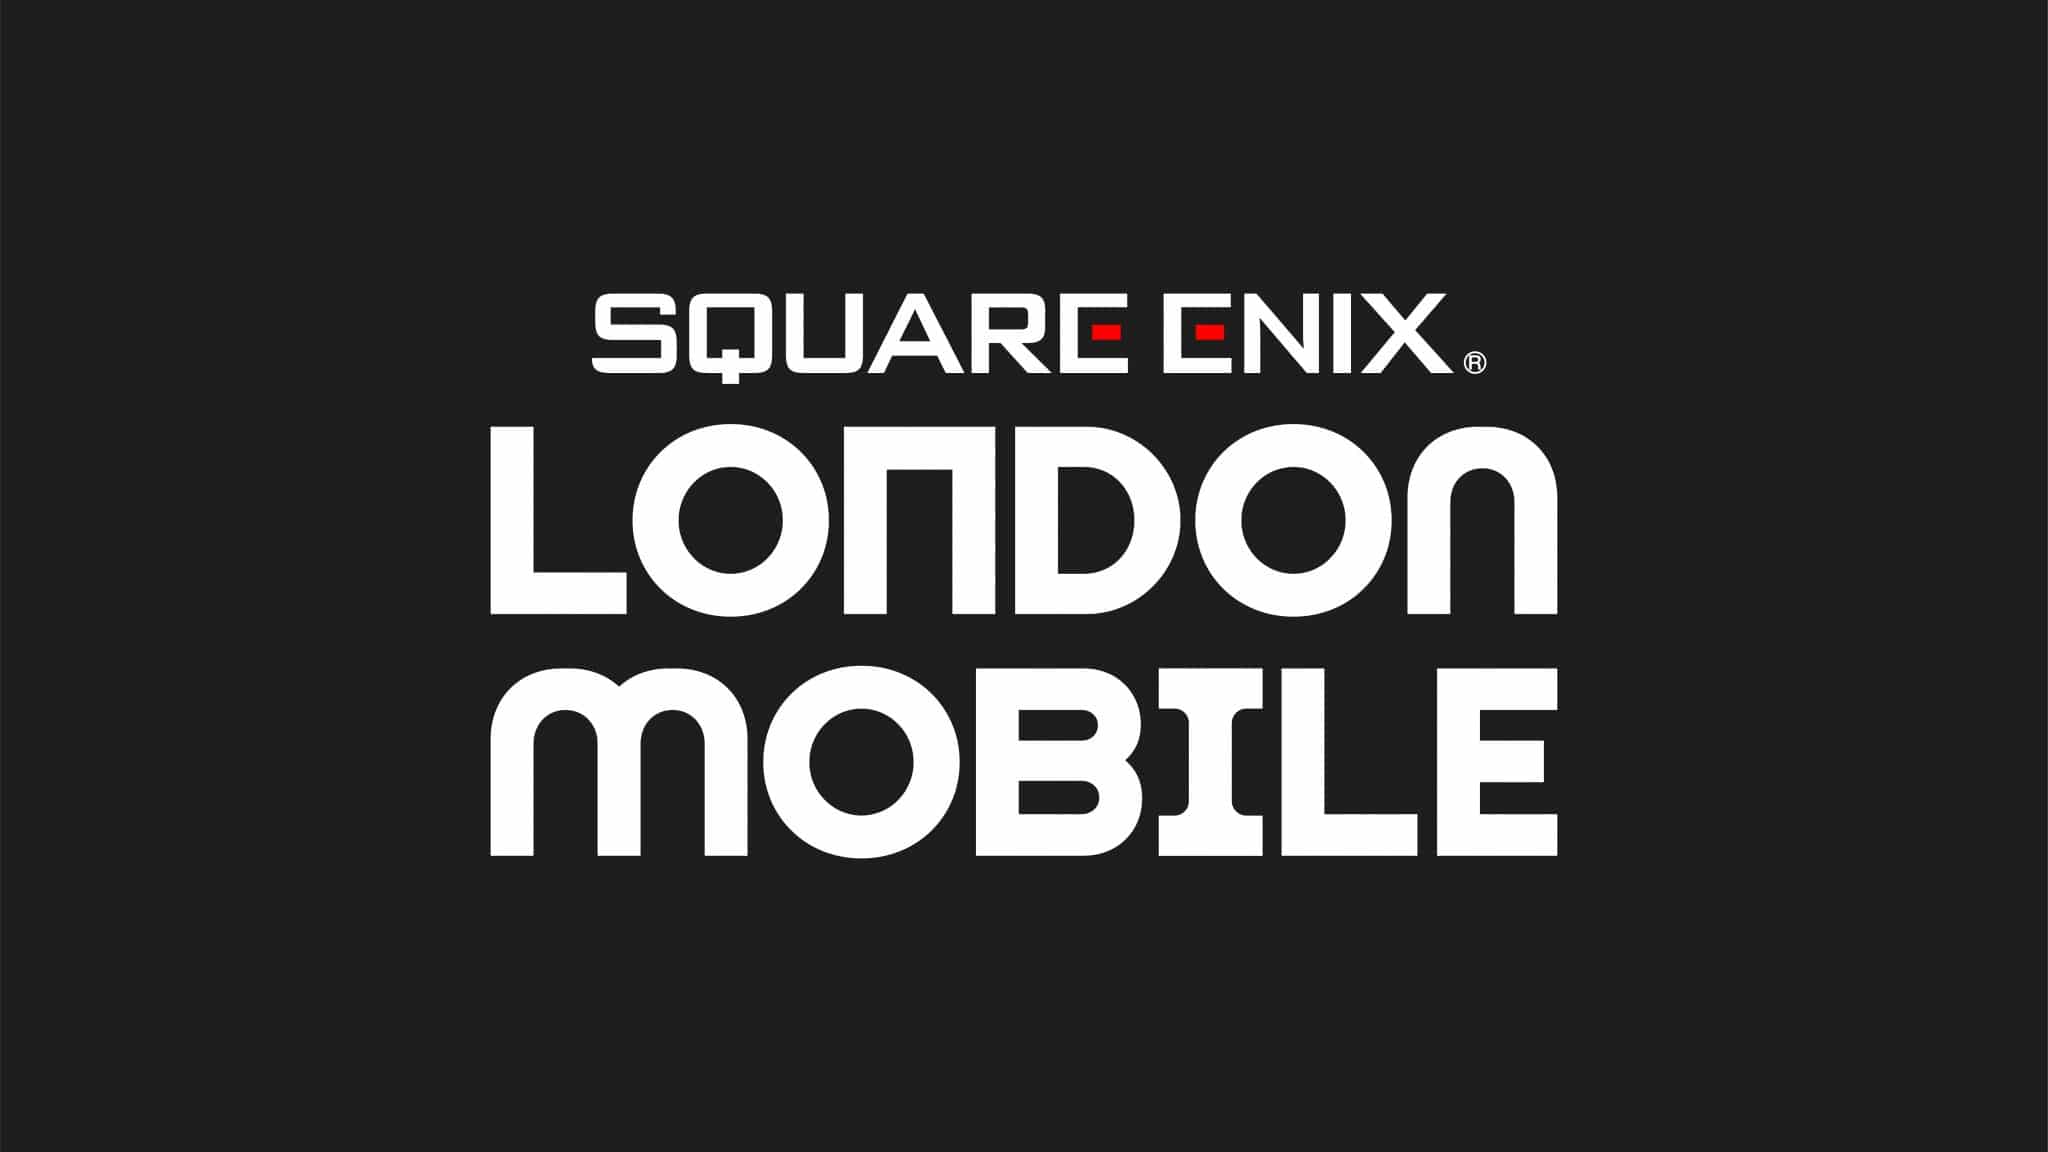 Square Enix London Mobile Studio Announced; Tomb Raider and Avatar: The Last Airbender Mobile Games in Development